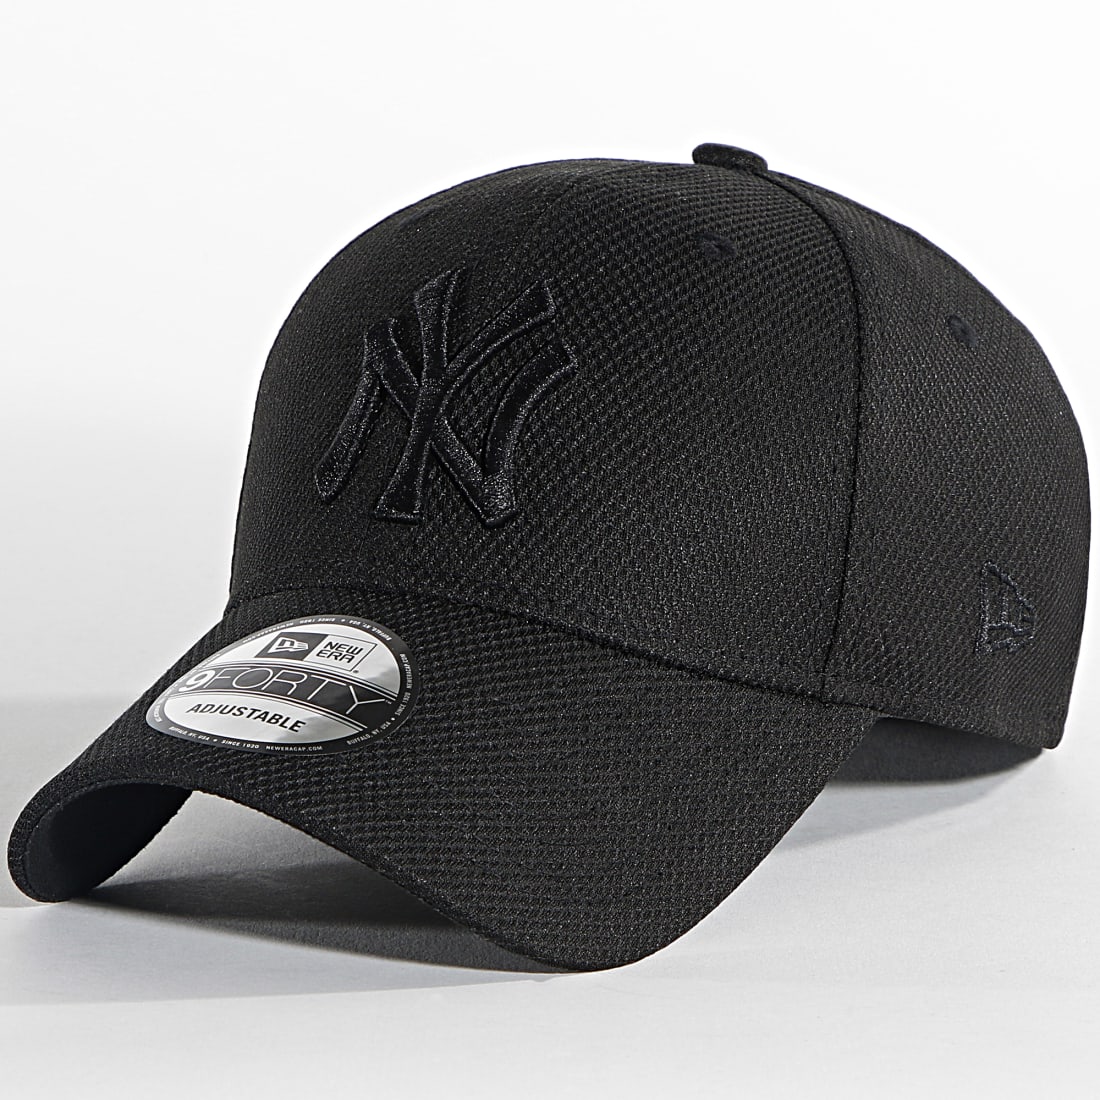 New Era - Casquette 9Forty Diamond Era New York Yankees Noir